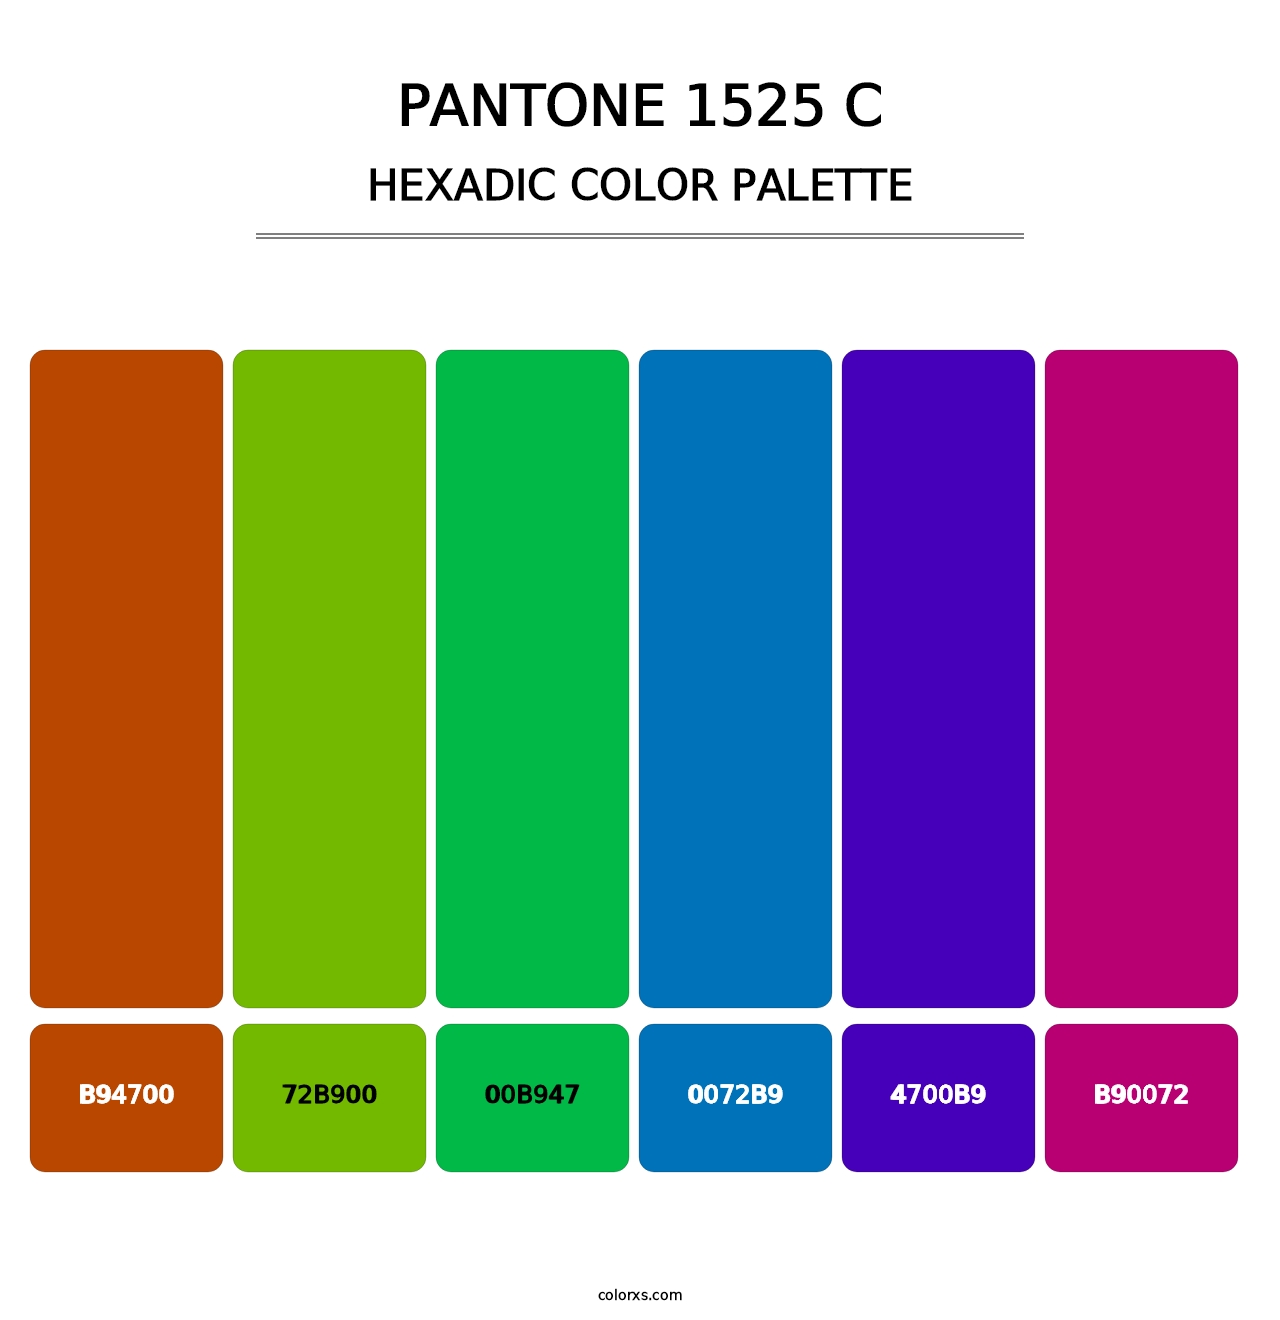 PANTONE 1525 C - Hexadic Color Palette